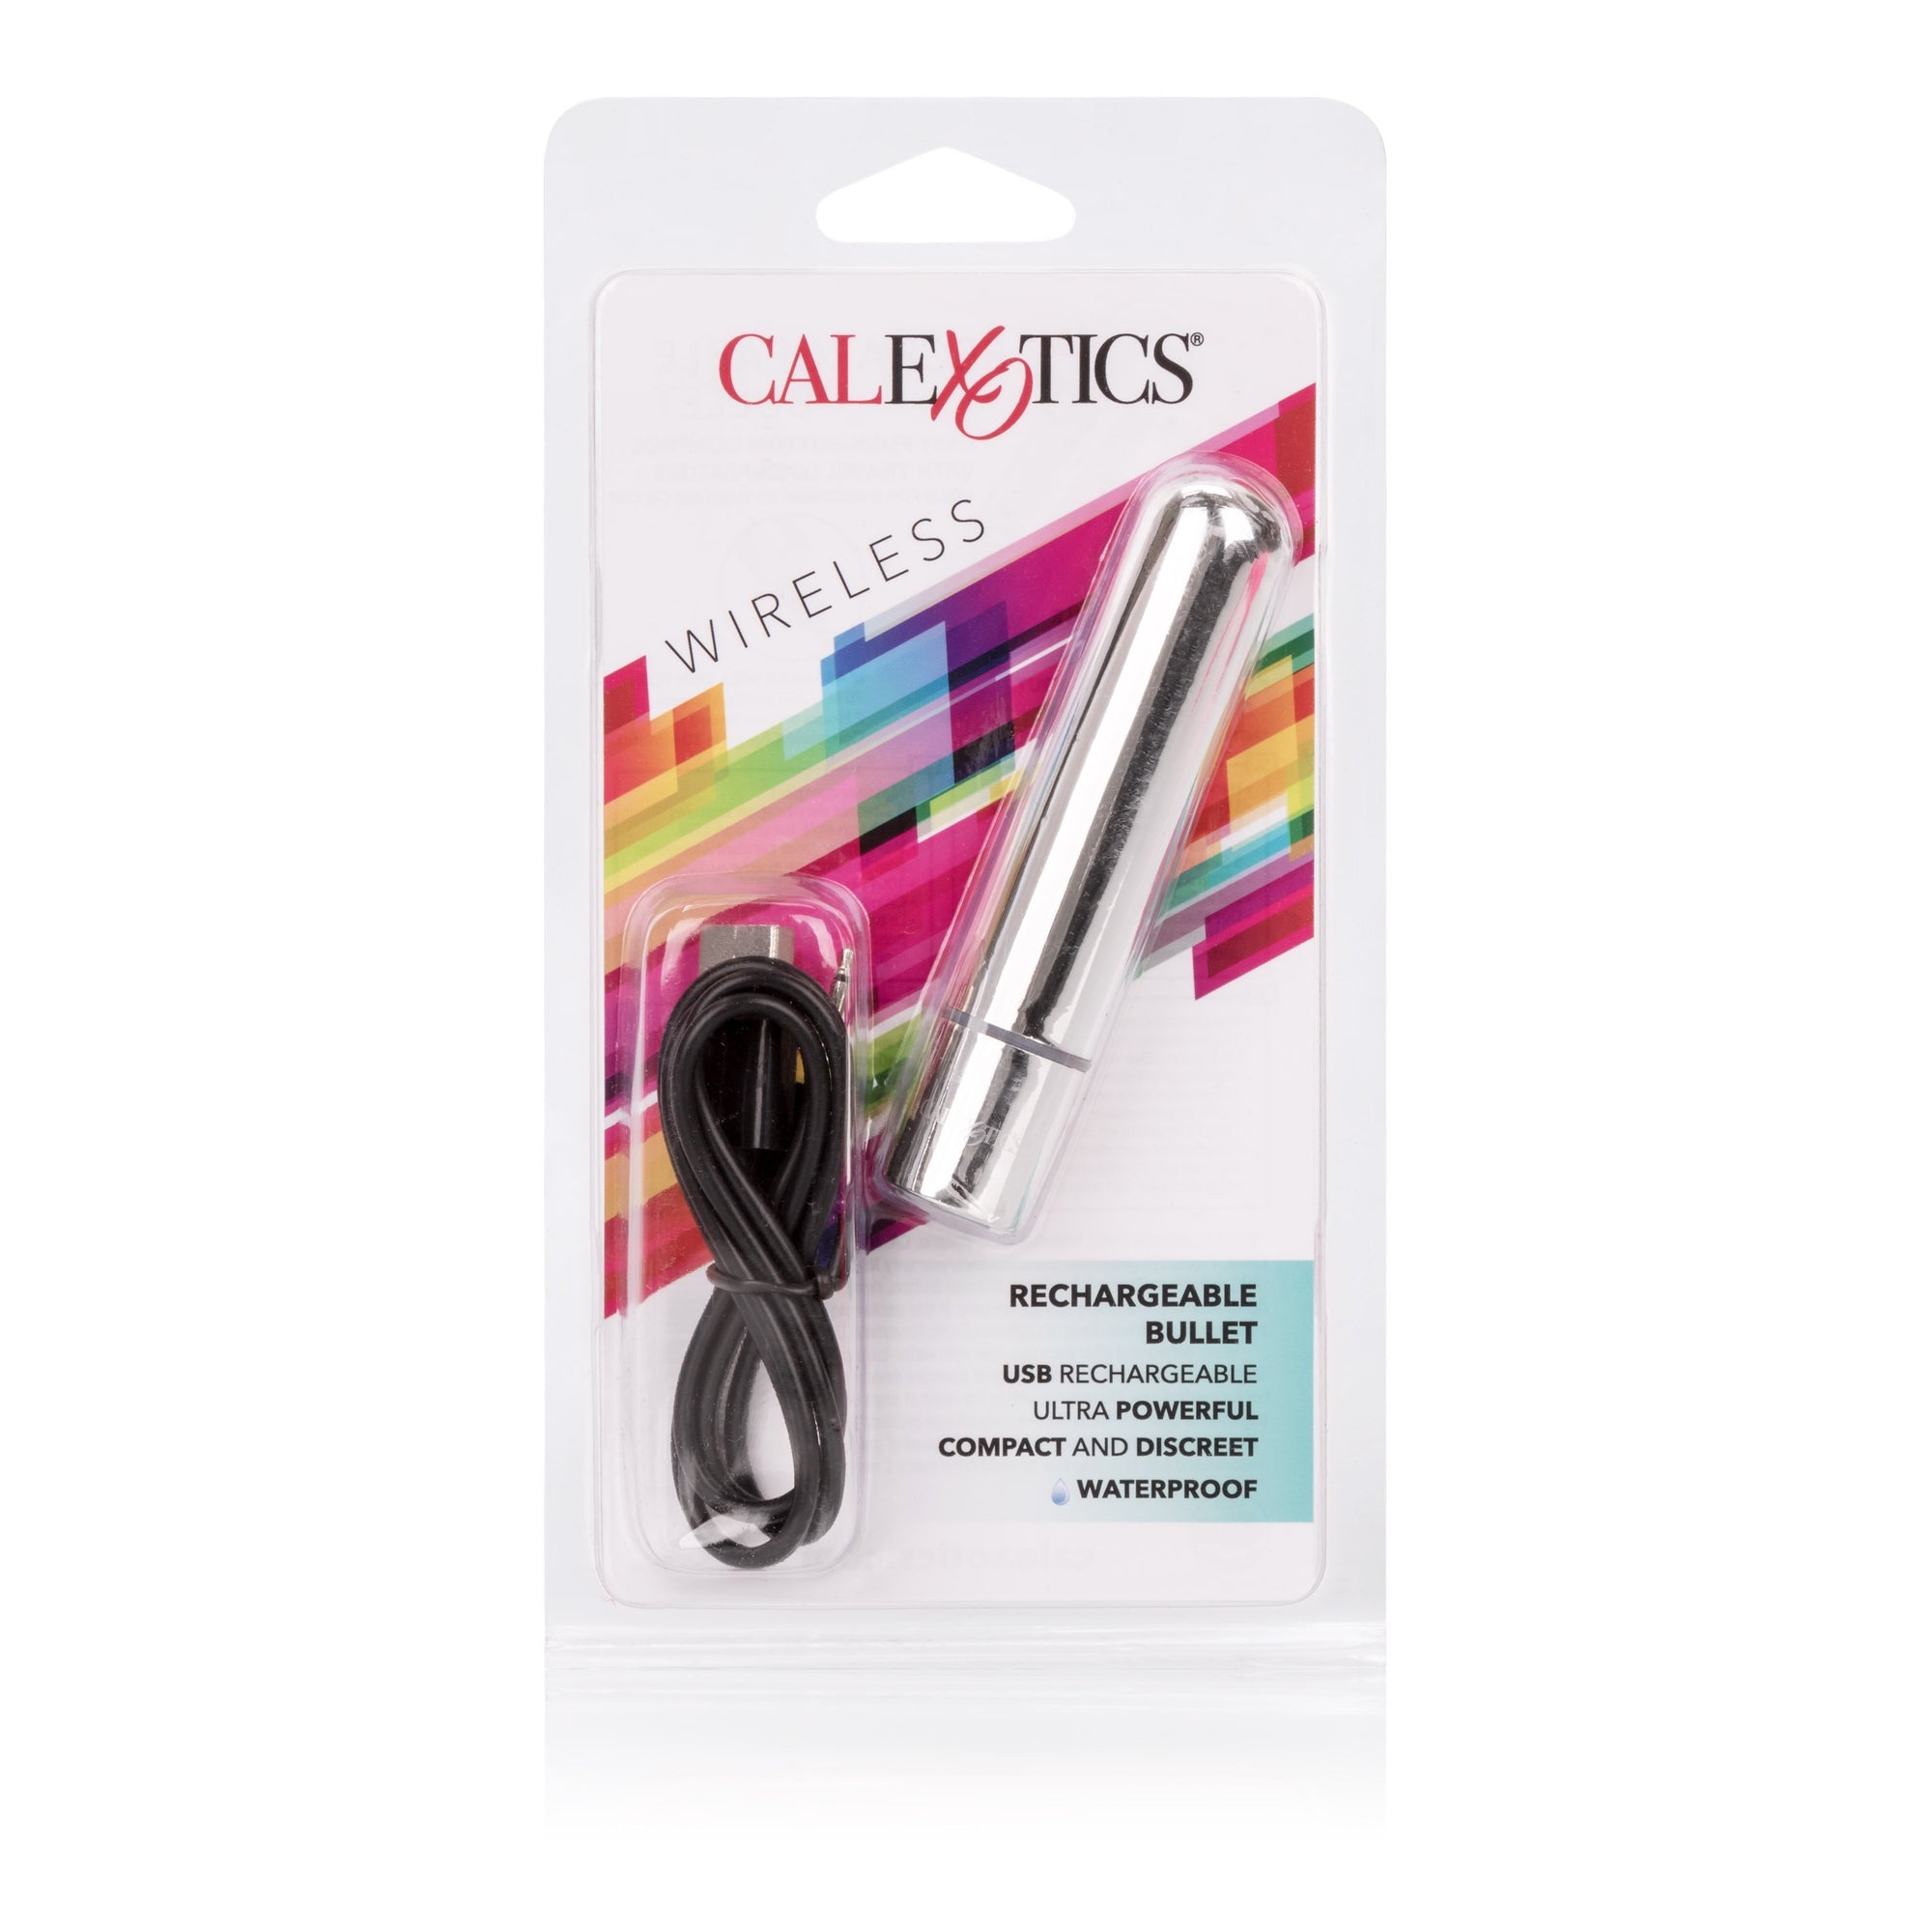 California Exotics - Wireless USB Rechargeable Bullet Vibrator (Silver) Bullet (Vibration) Rechargeable Singapore